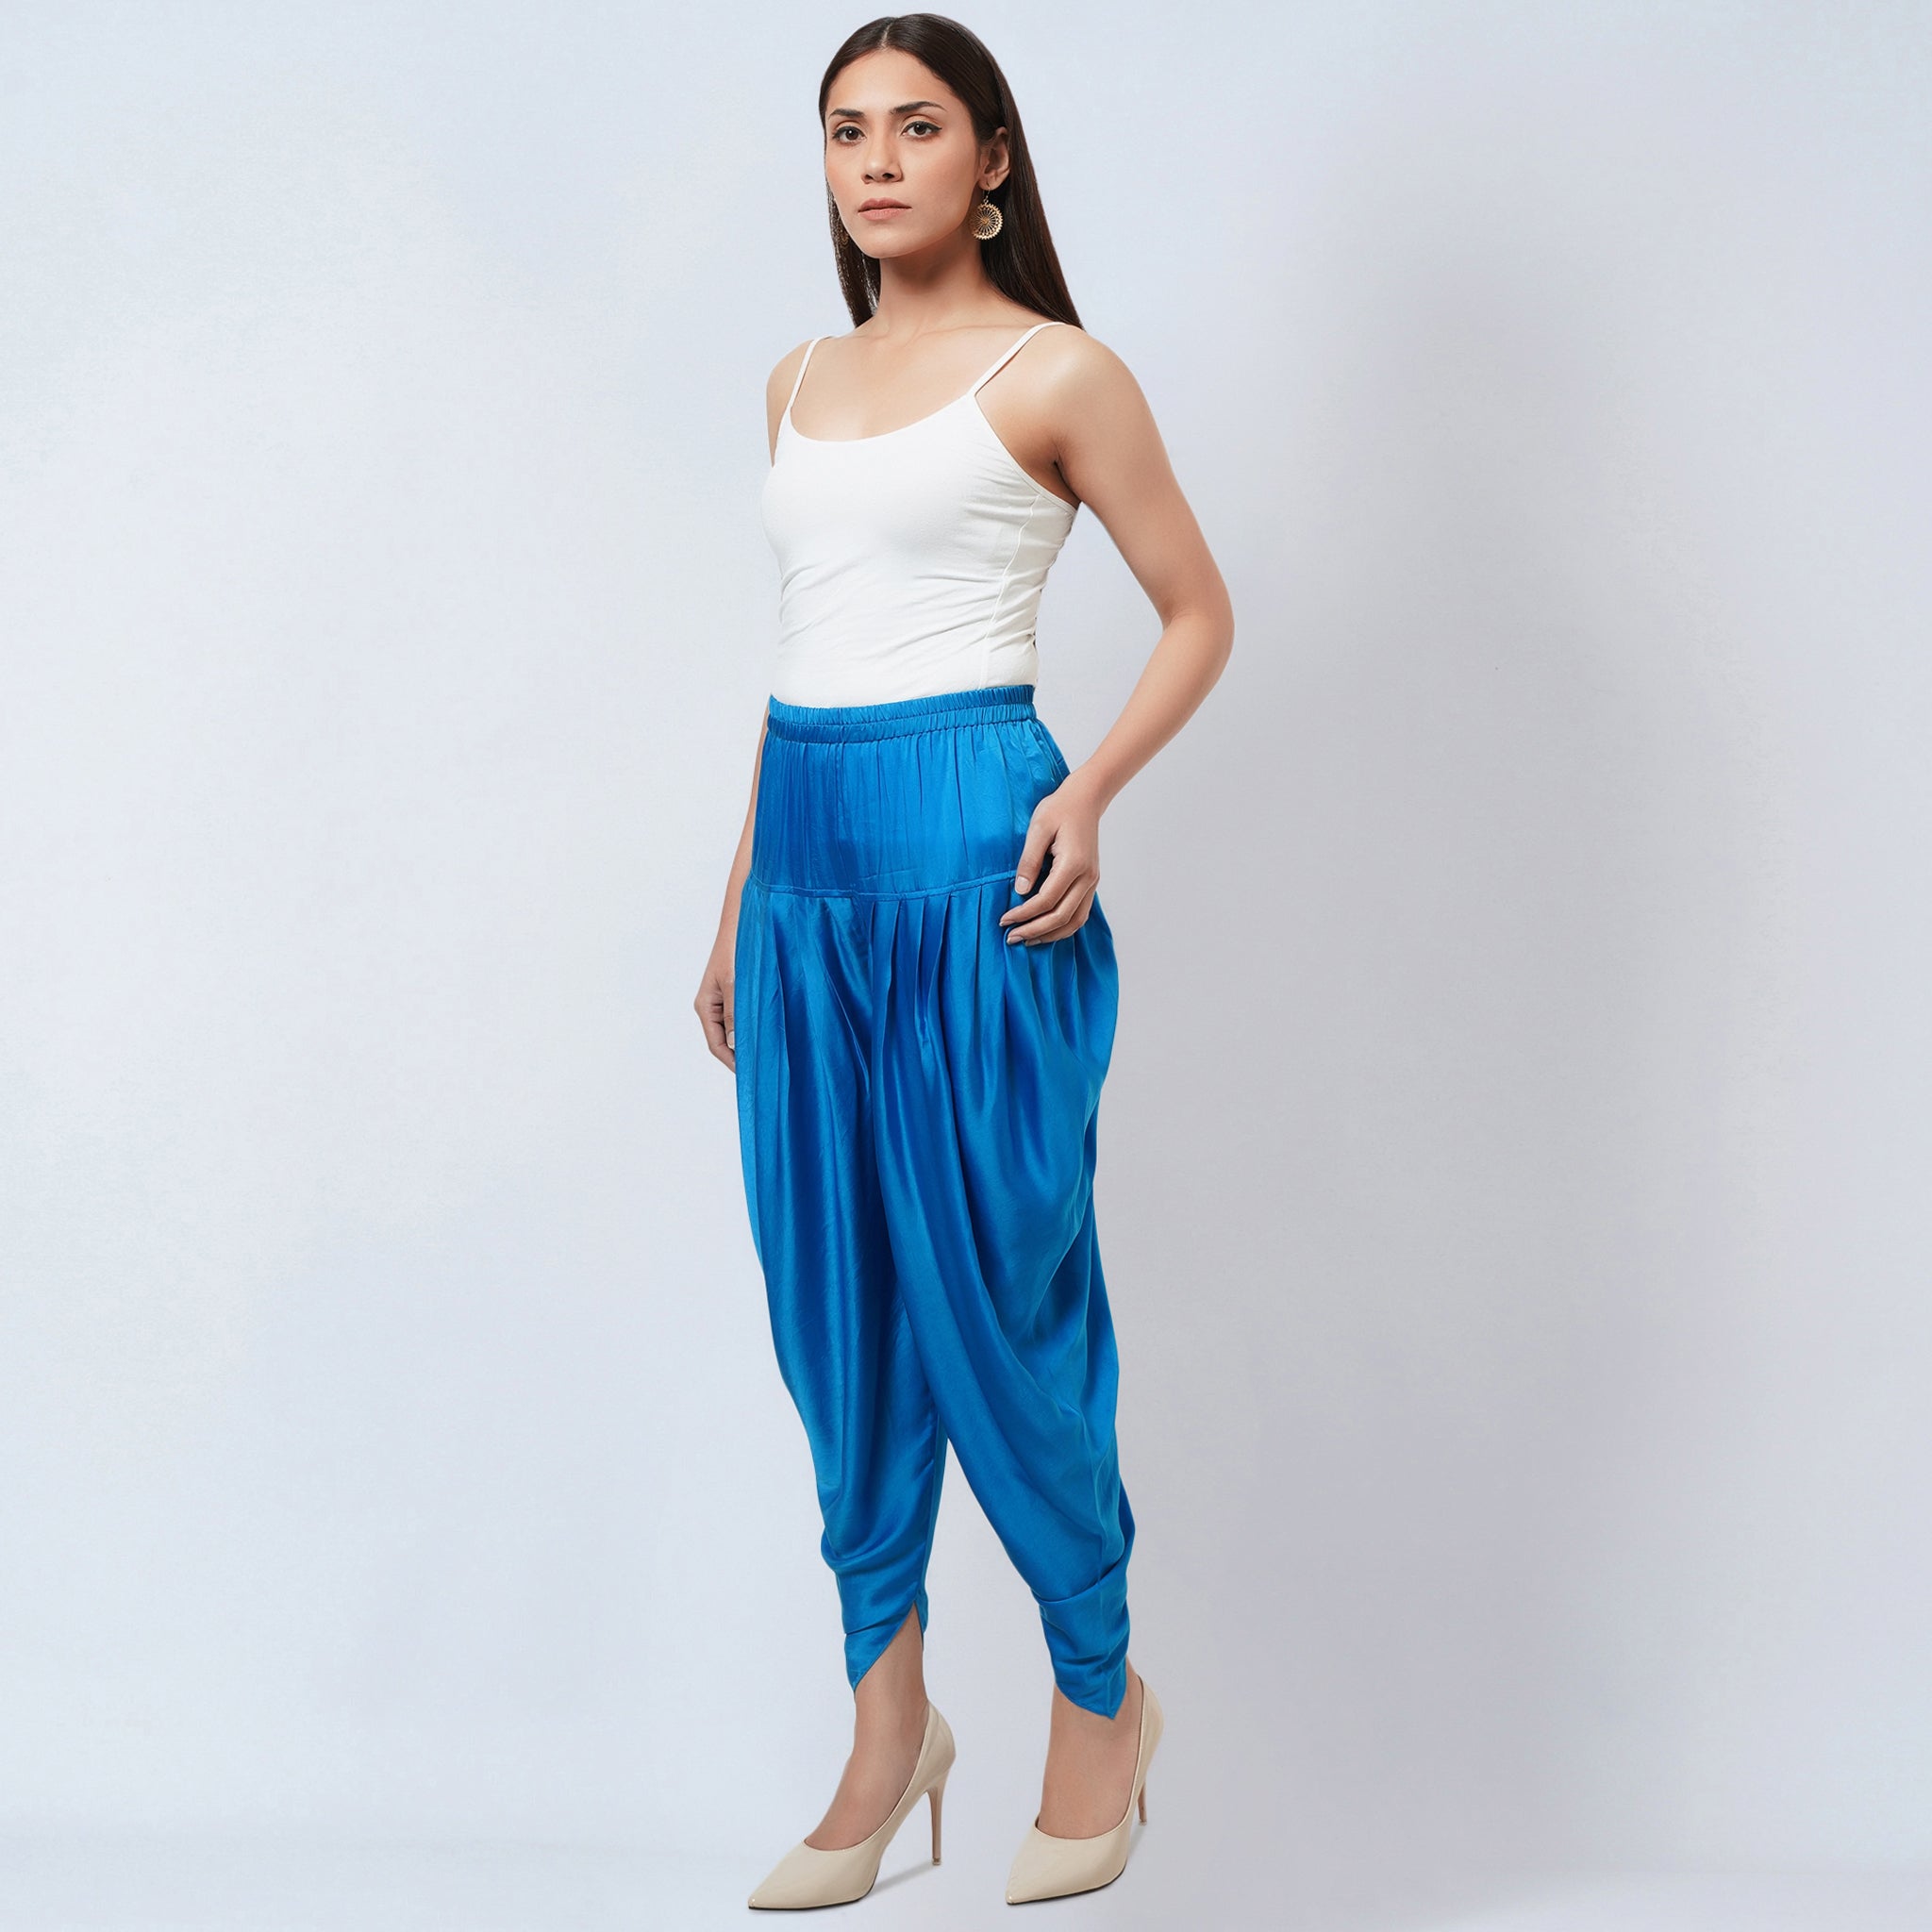 Women's Regular Fit Printed Stylish Dhoti Pants Free size Full Length Dhoti  Pant | eBay